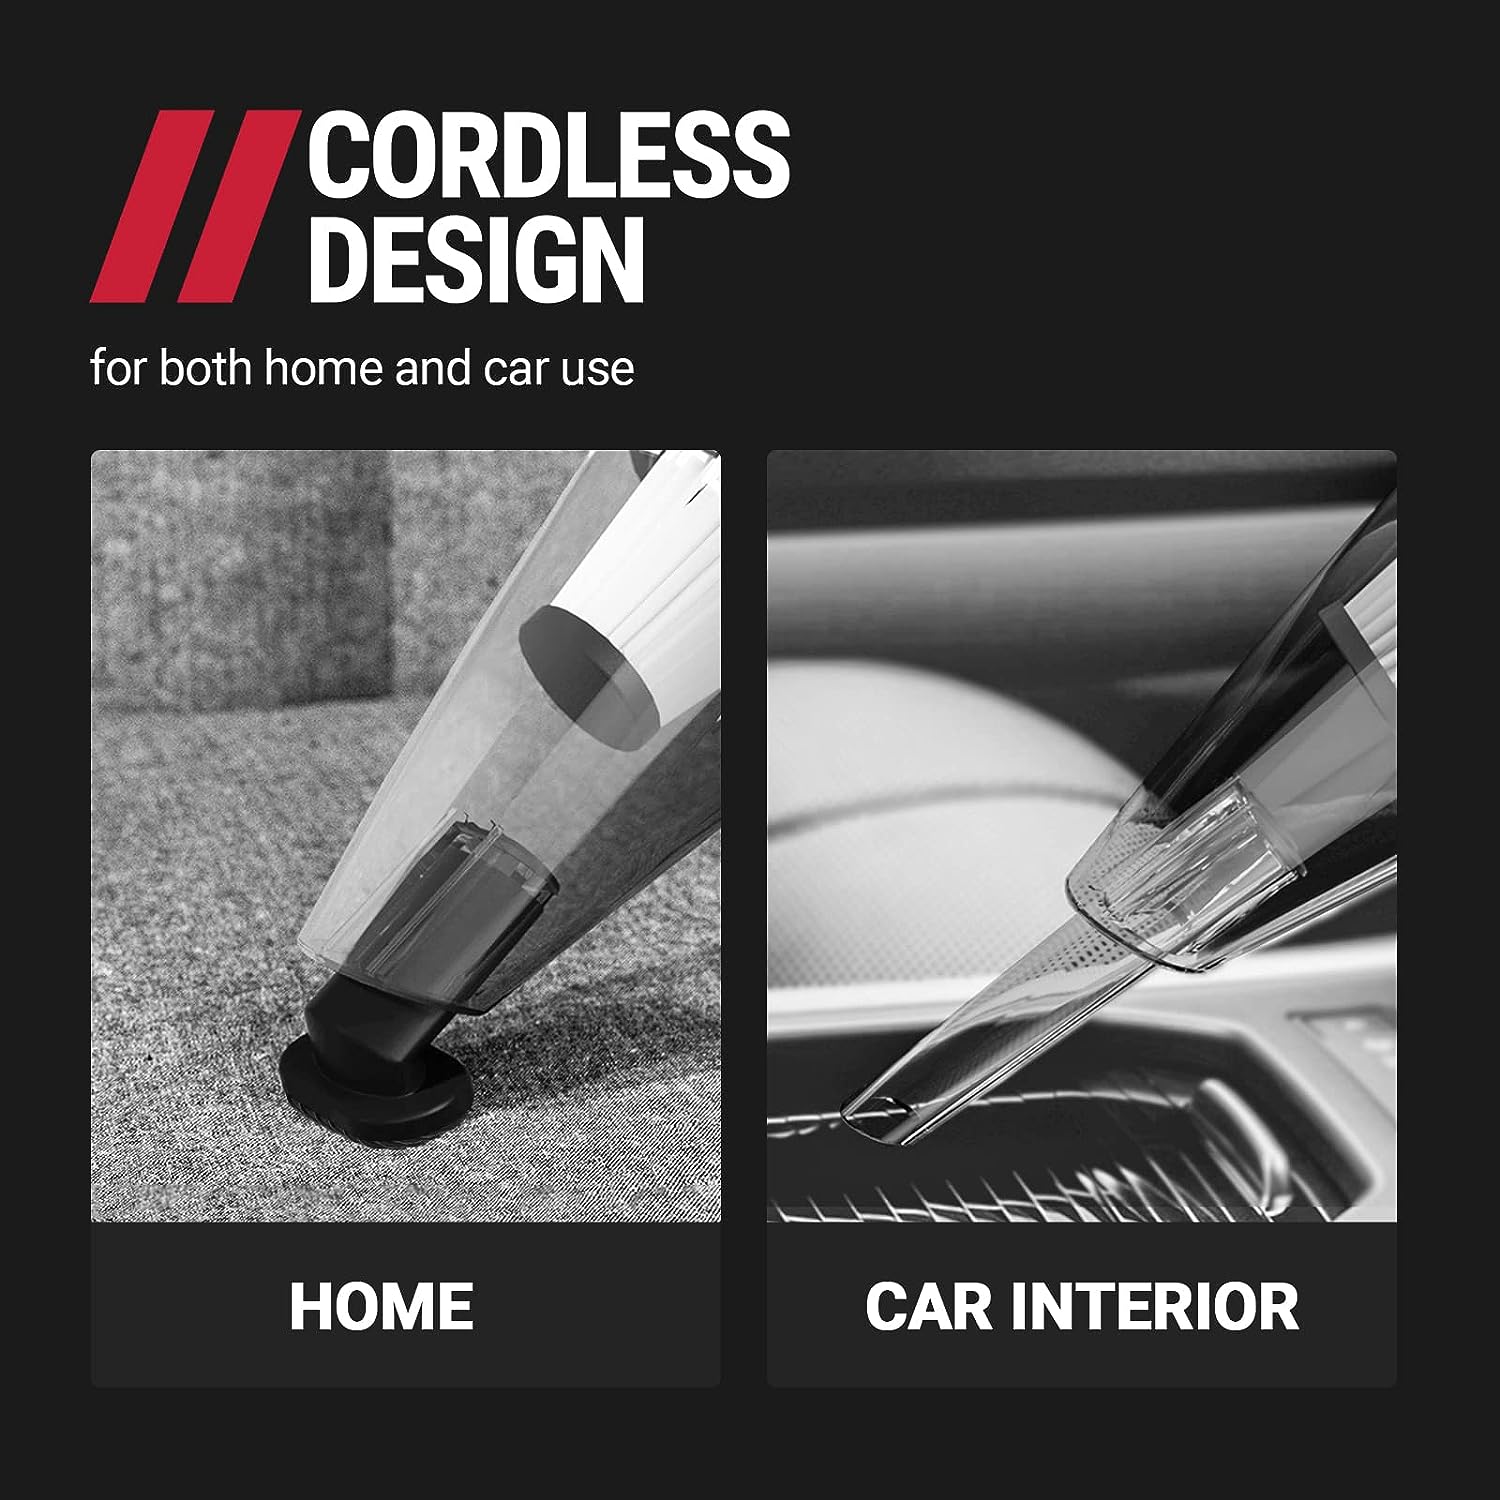 Car Handheld Vacuum Cleaner Cordless Rechargeable Hand Vacuum